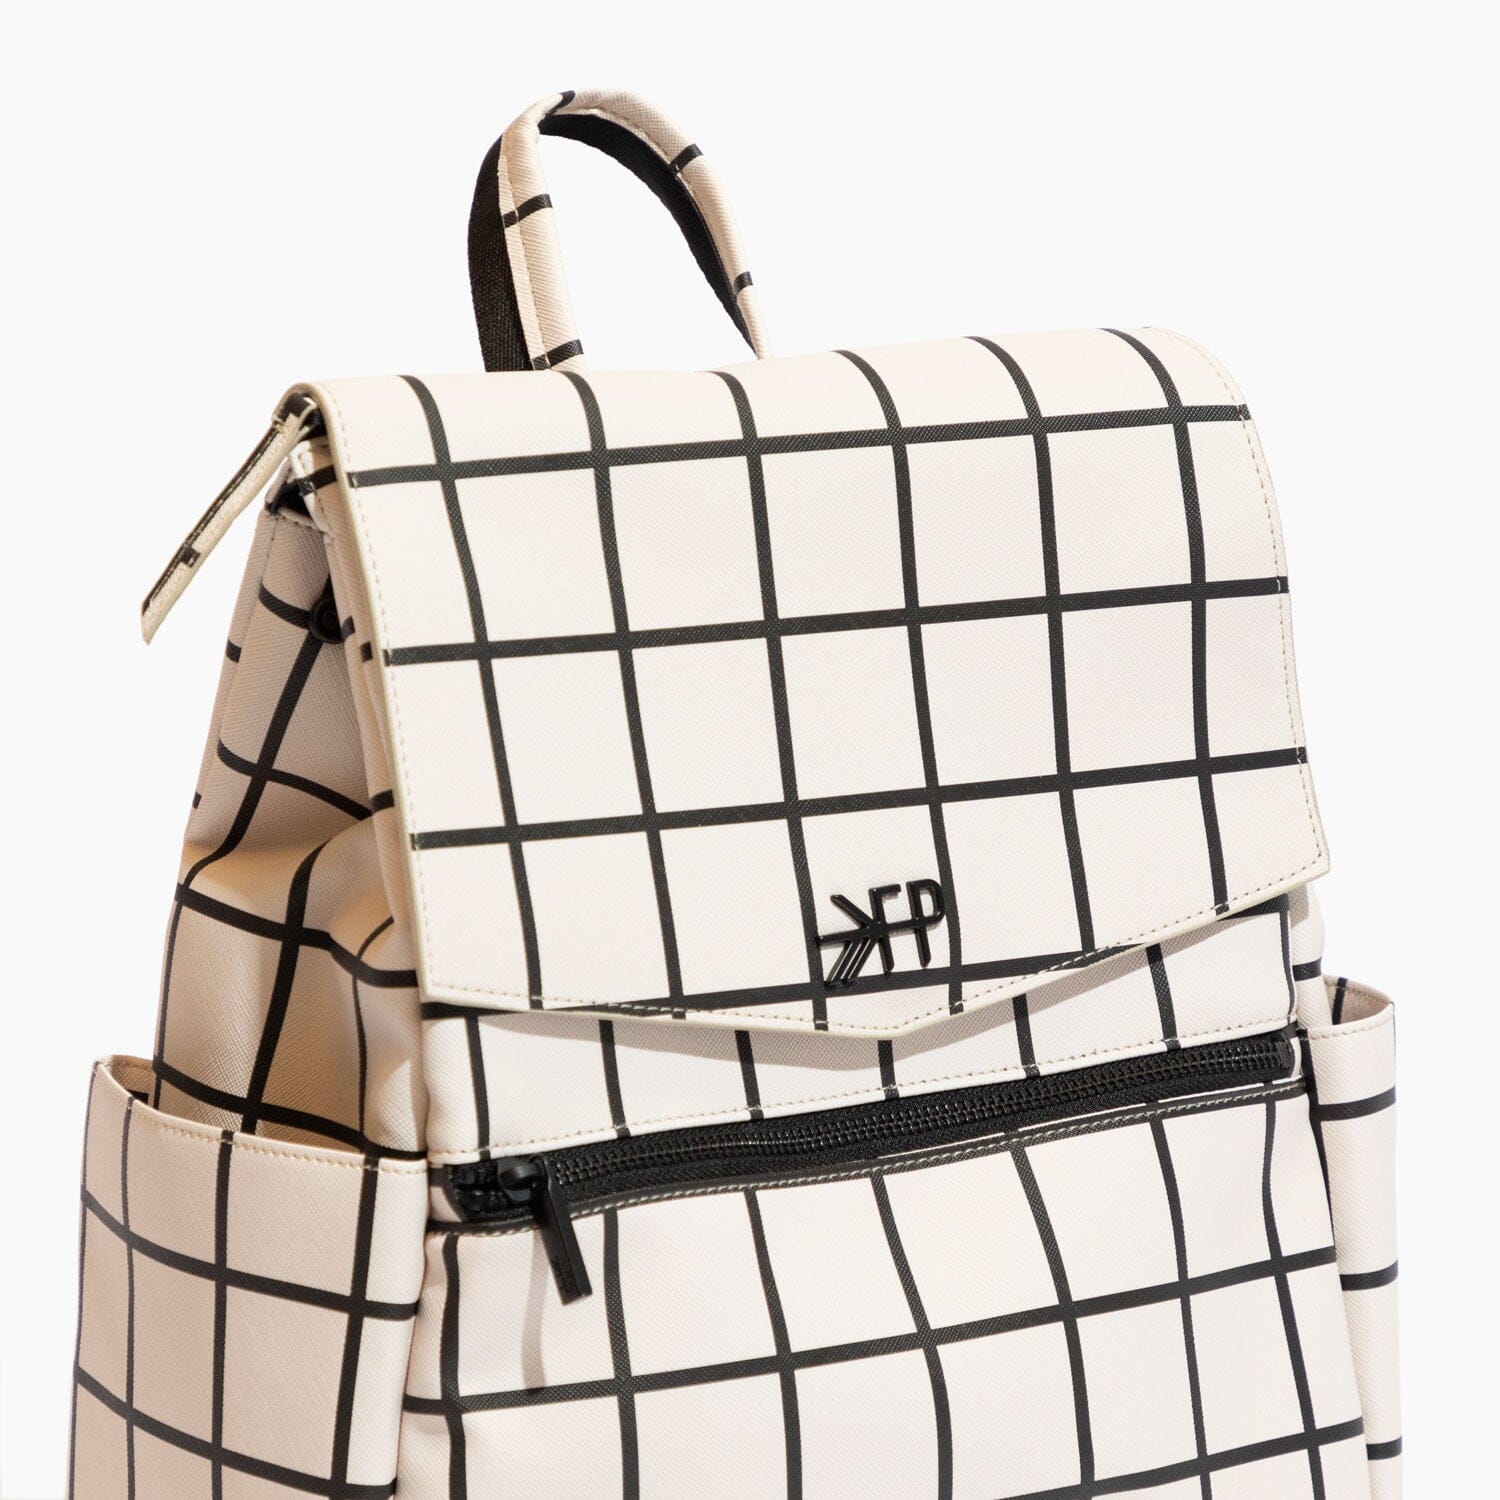 Bags, Mini Checkered Backpack